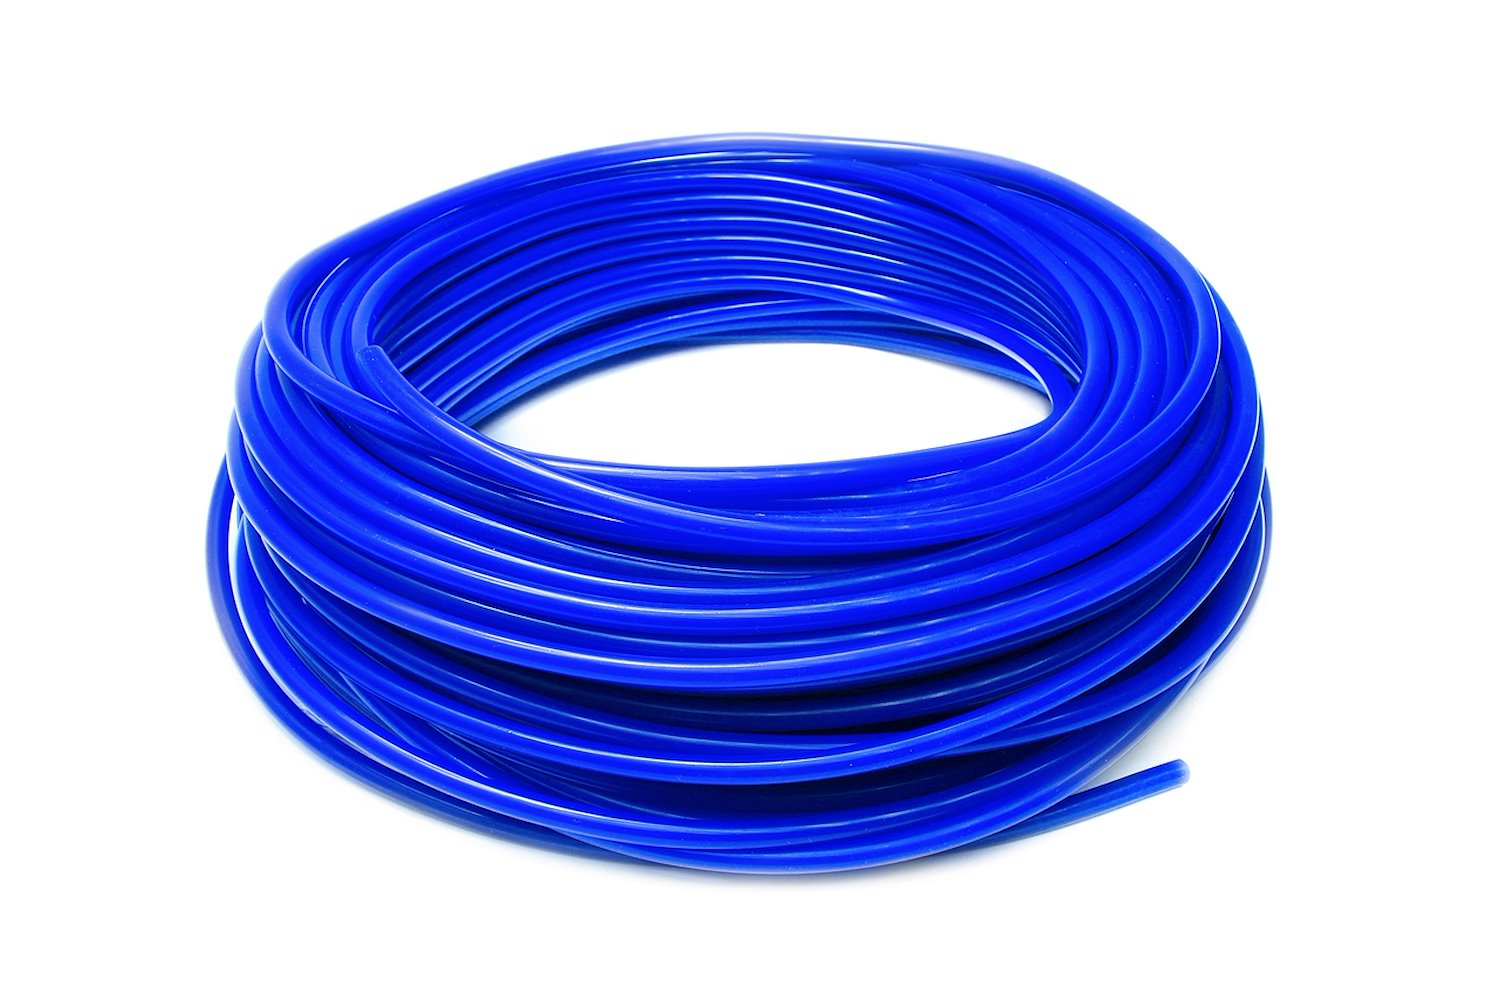 HTSVH8-BLUEx50 High-Temperature Silicone Vacuum Hose Tubing, 5/16 in. ID, 50 ft. Roll, Blue